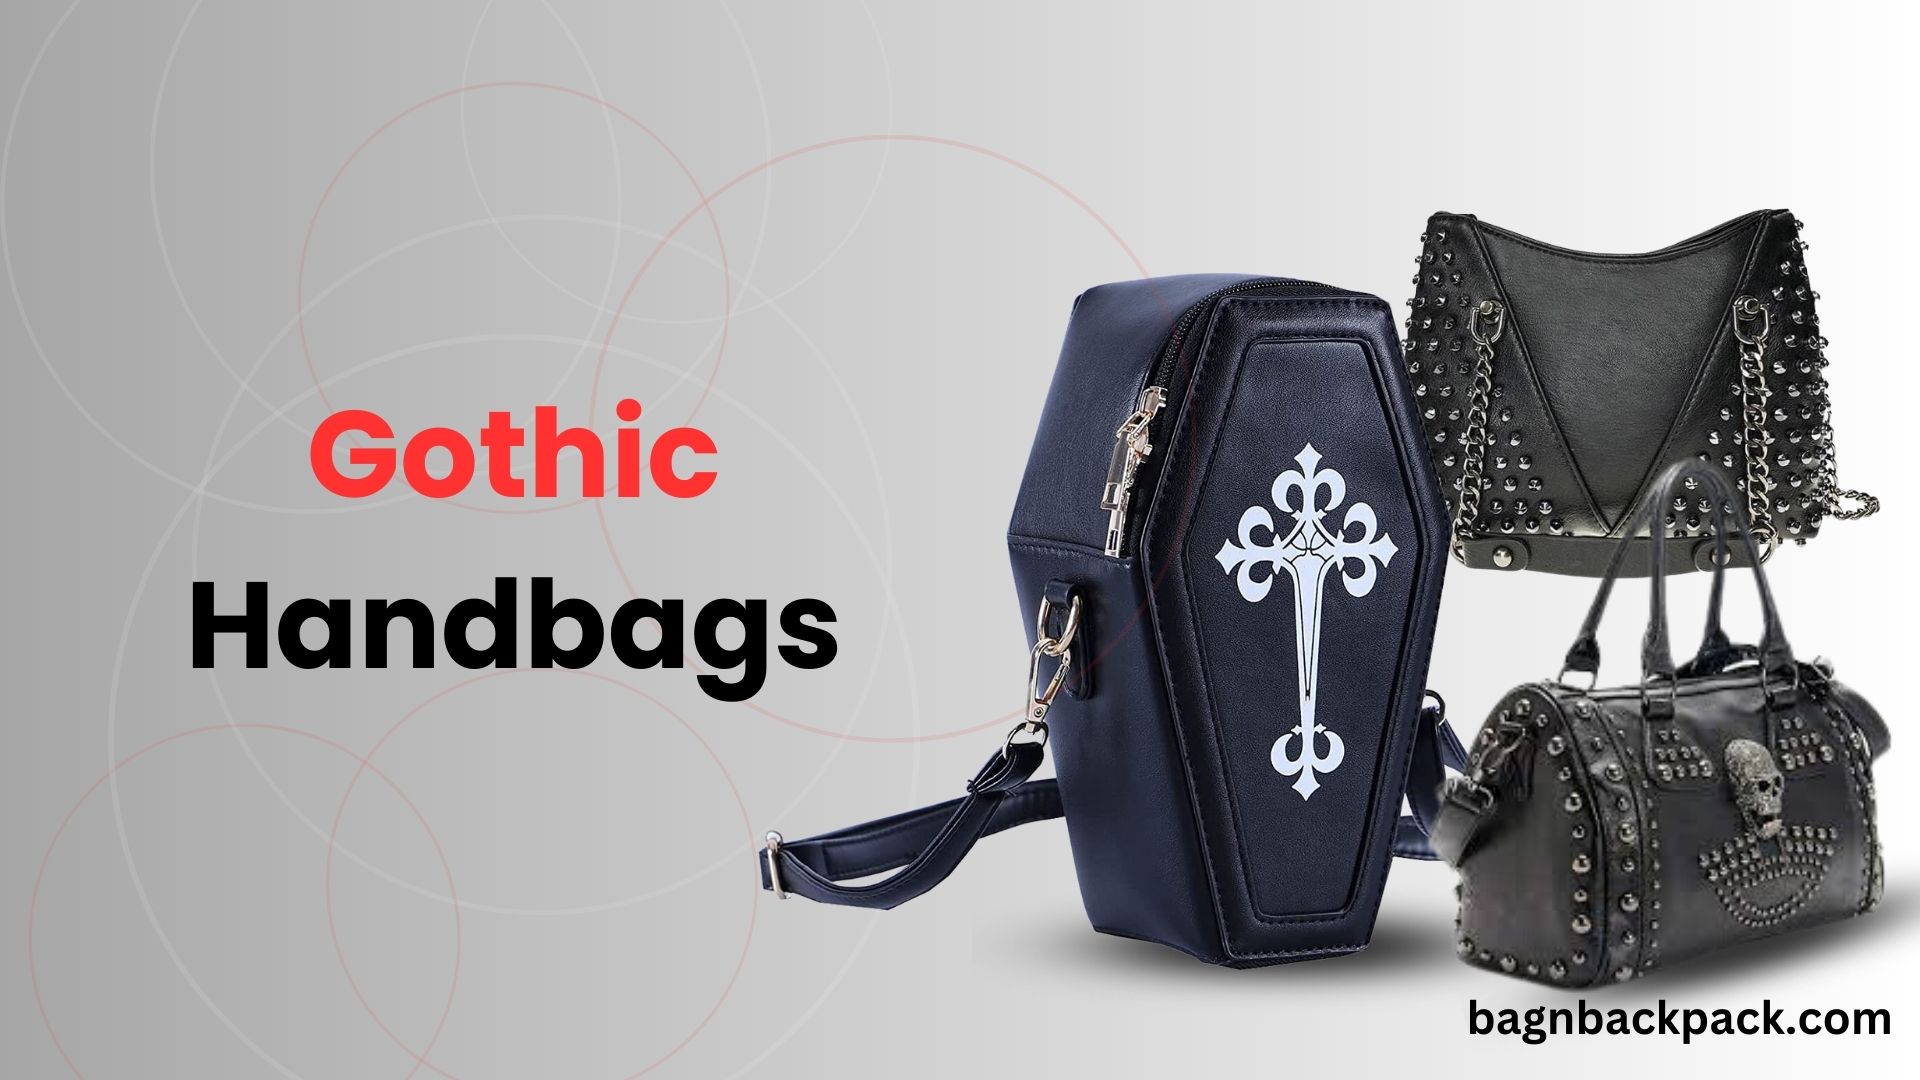 Gothic Handbags